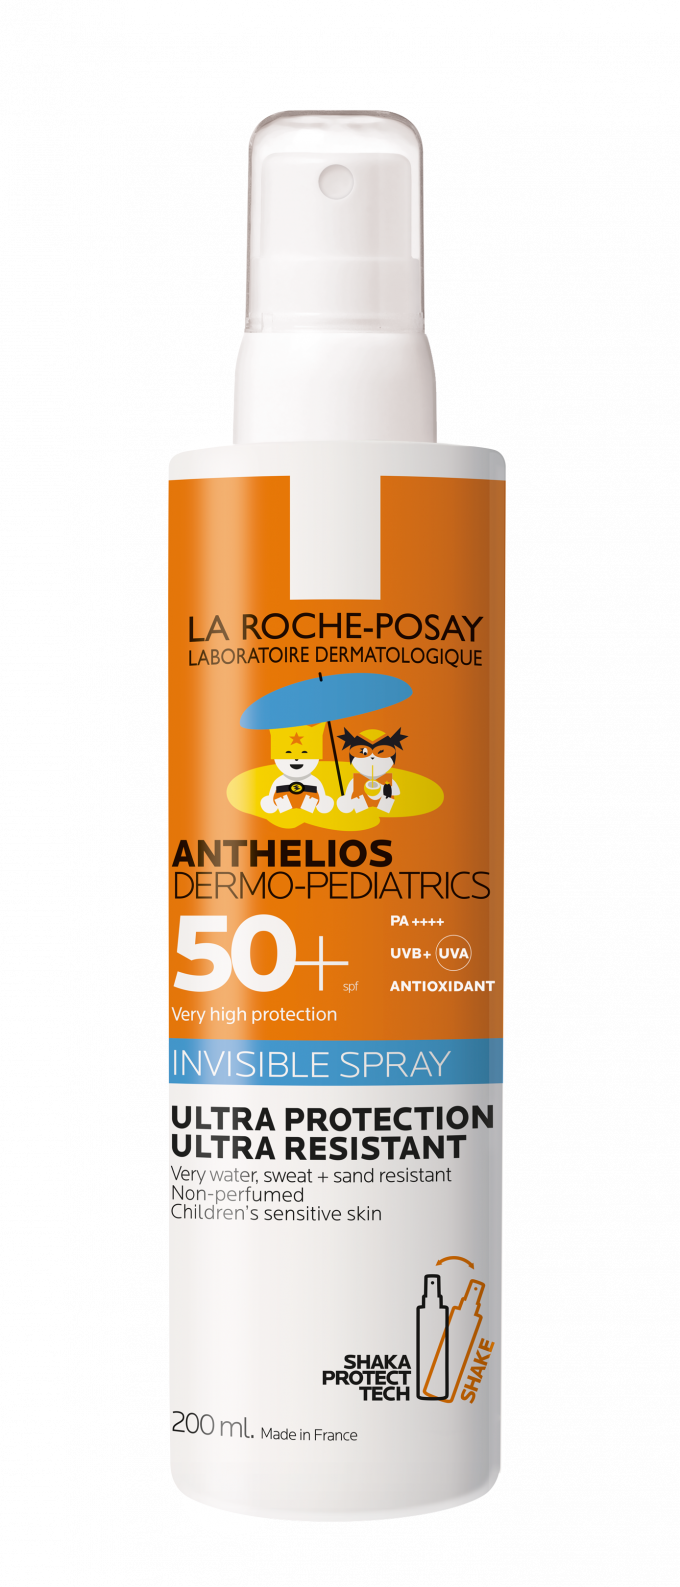 Anthelios Dermo-Pediatrics 50+ spray - La Roche-Posay